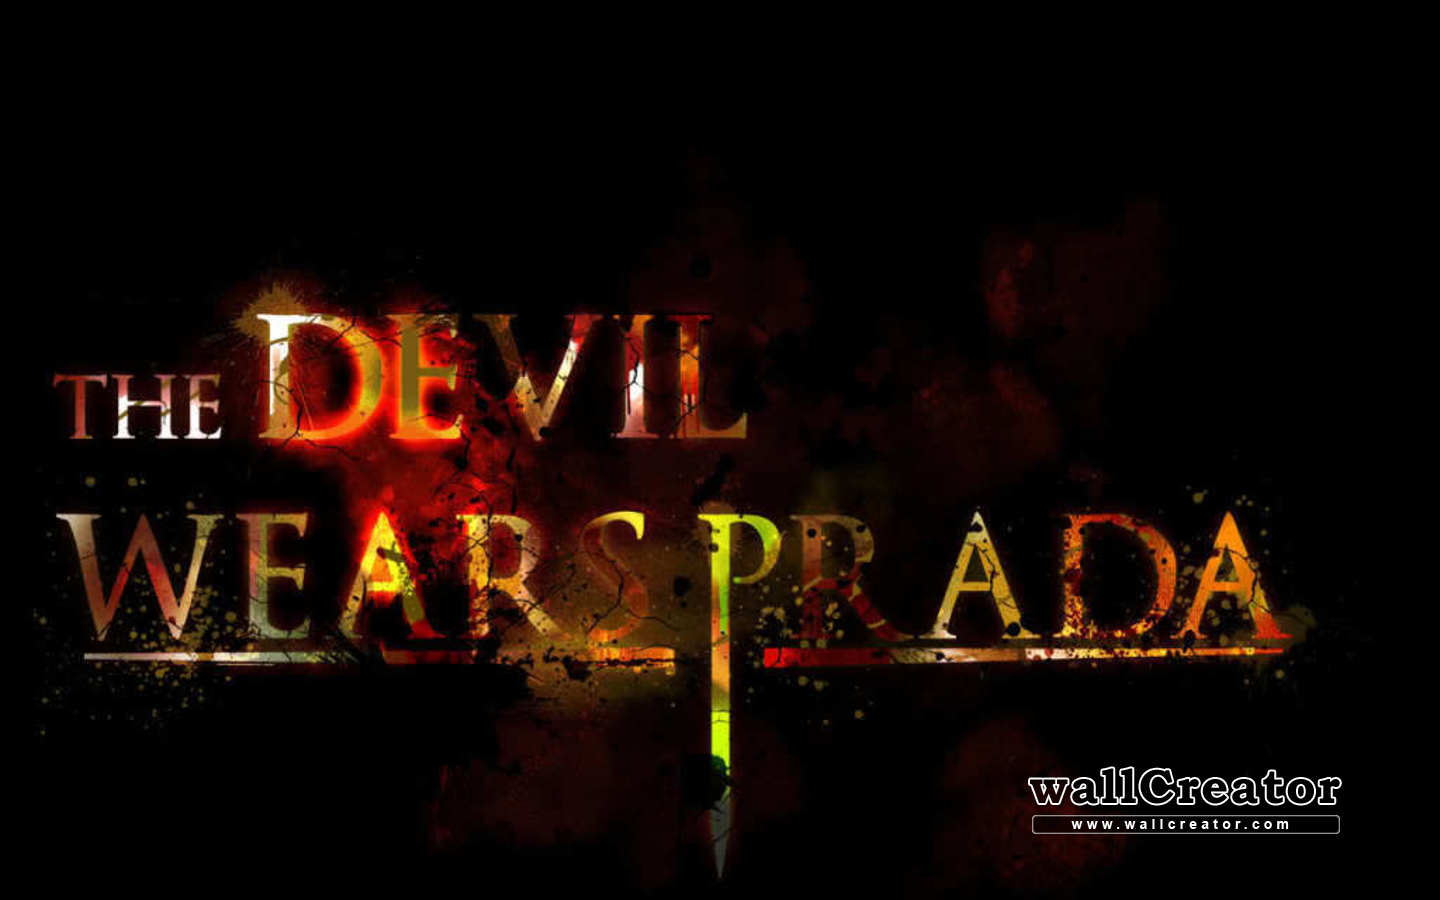 The Devil Wears Prada - 1440 / 900 Wallpaper